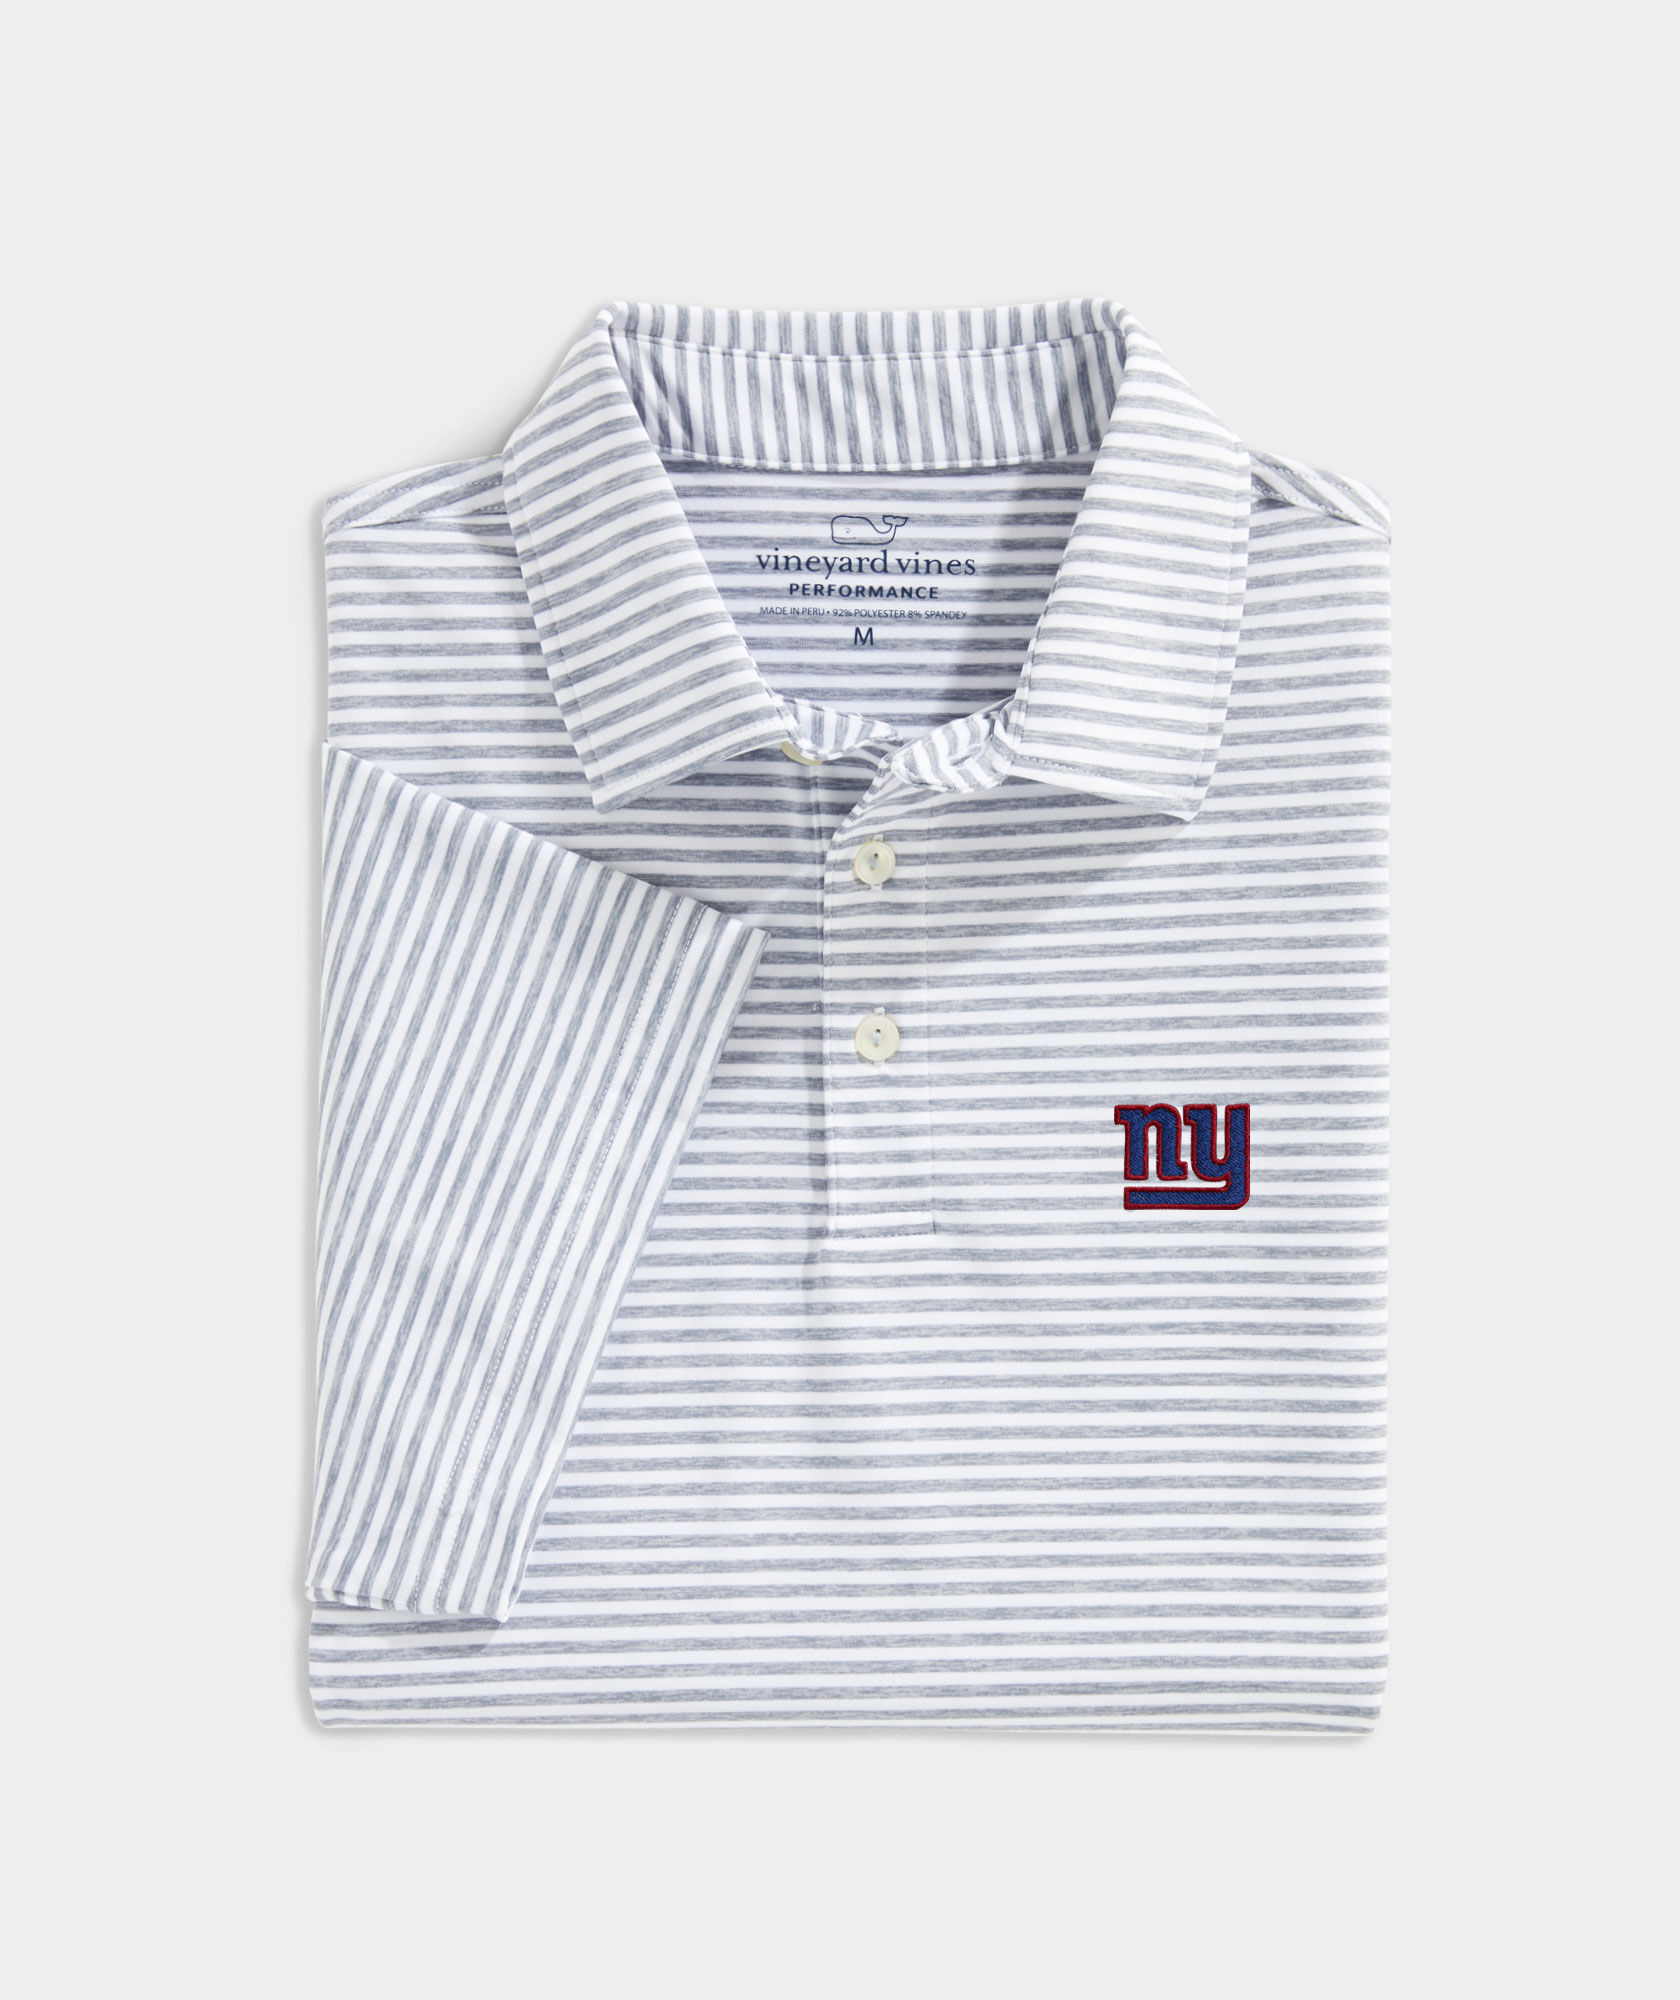 New York Giants Vineyard Vines T Shirt